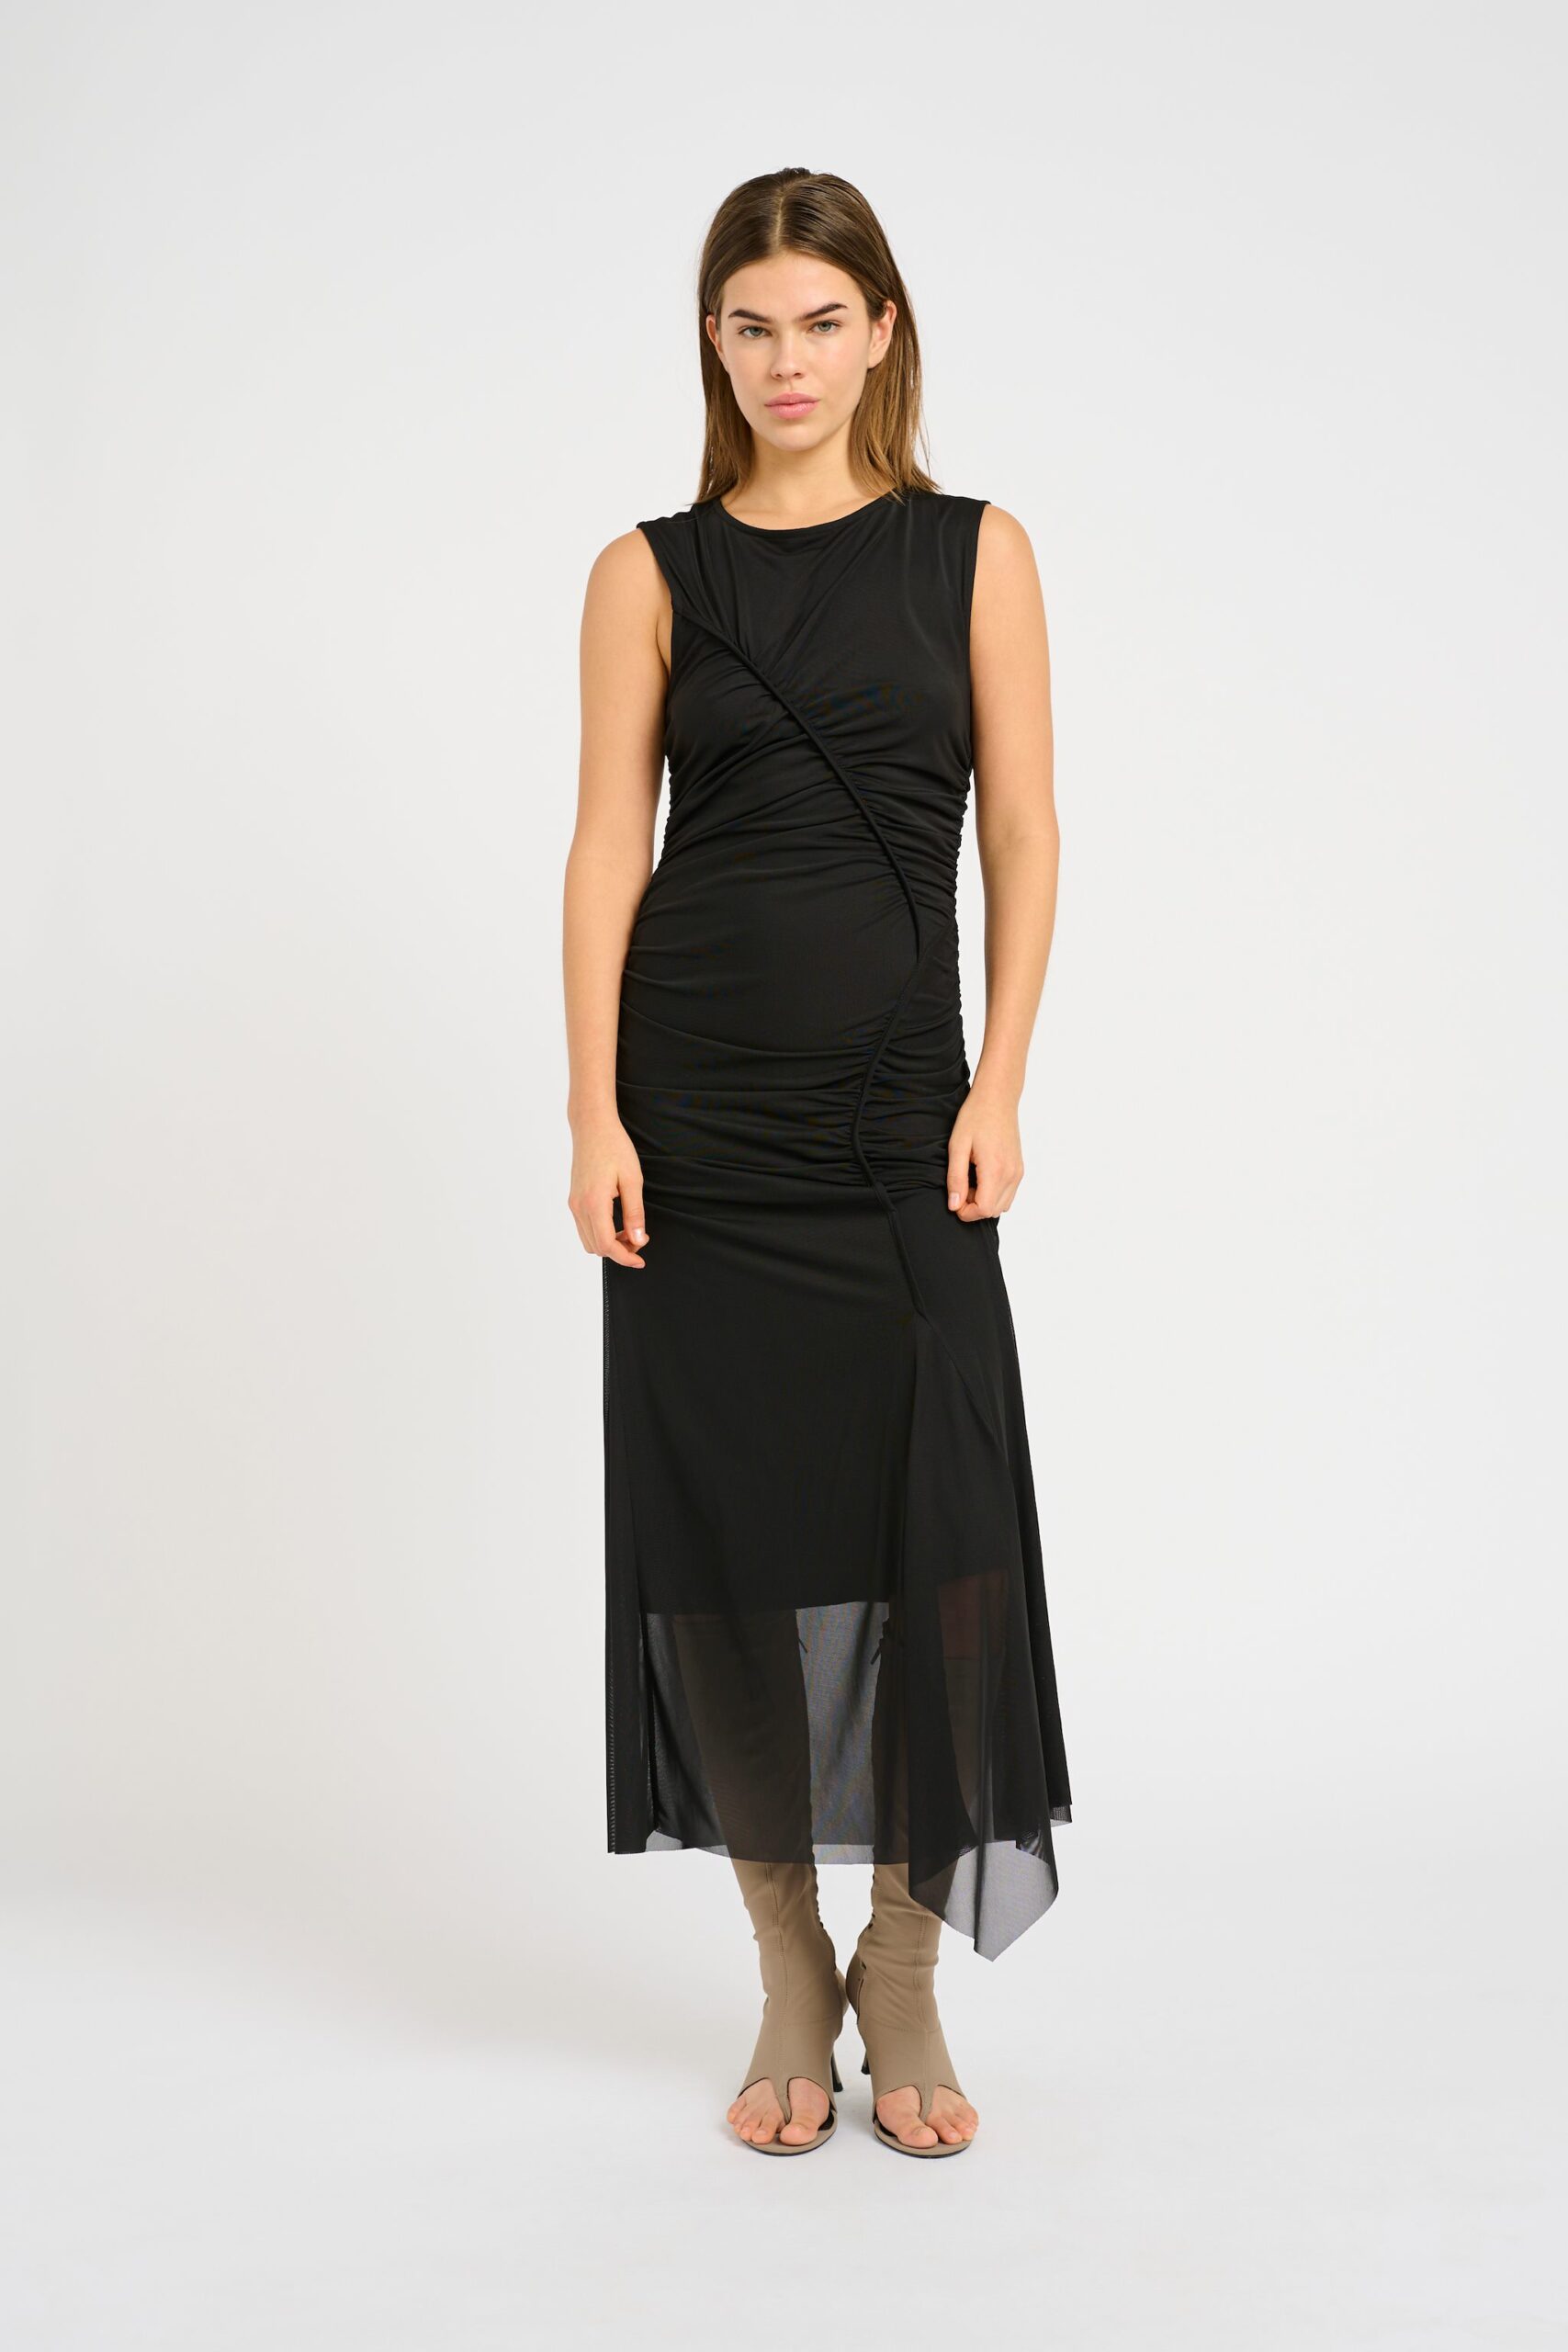 black-messigz-kjole.jpg